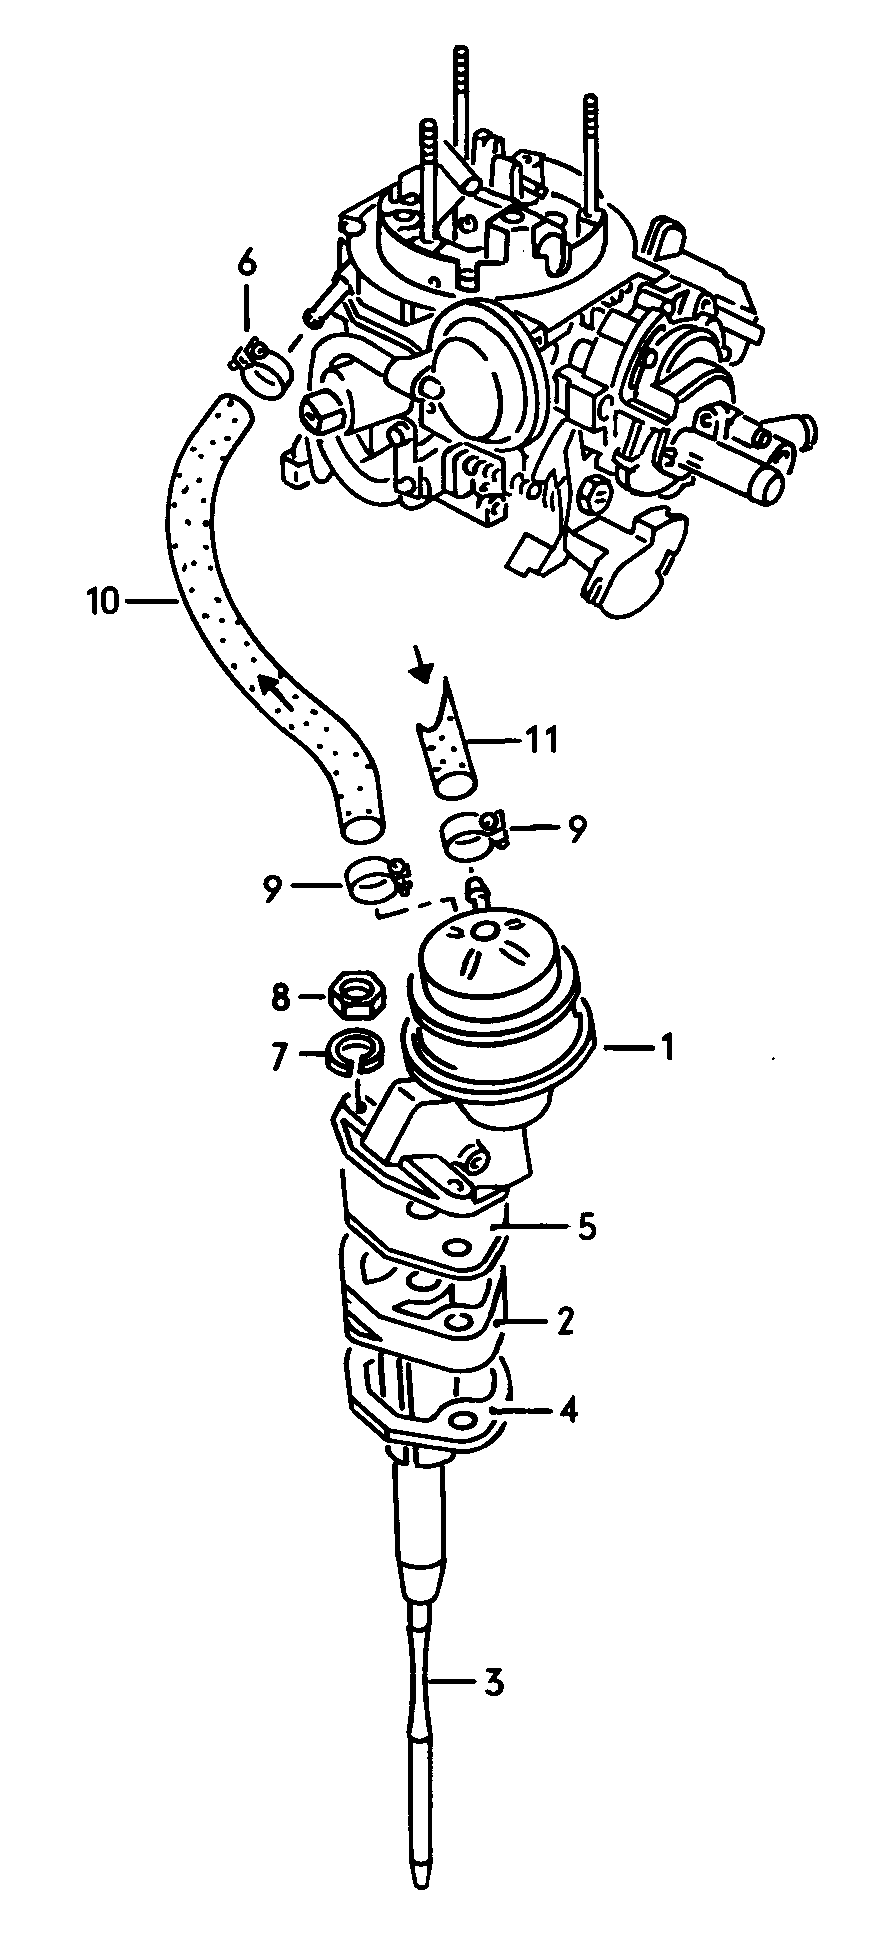 Pompa carburante 1,9l - Typ 2/syncro - t2